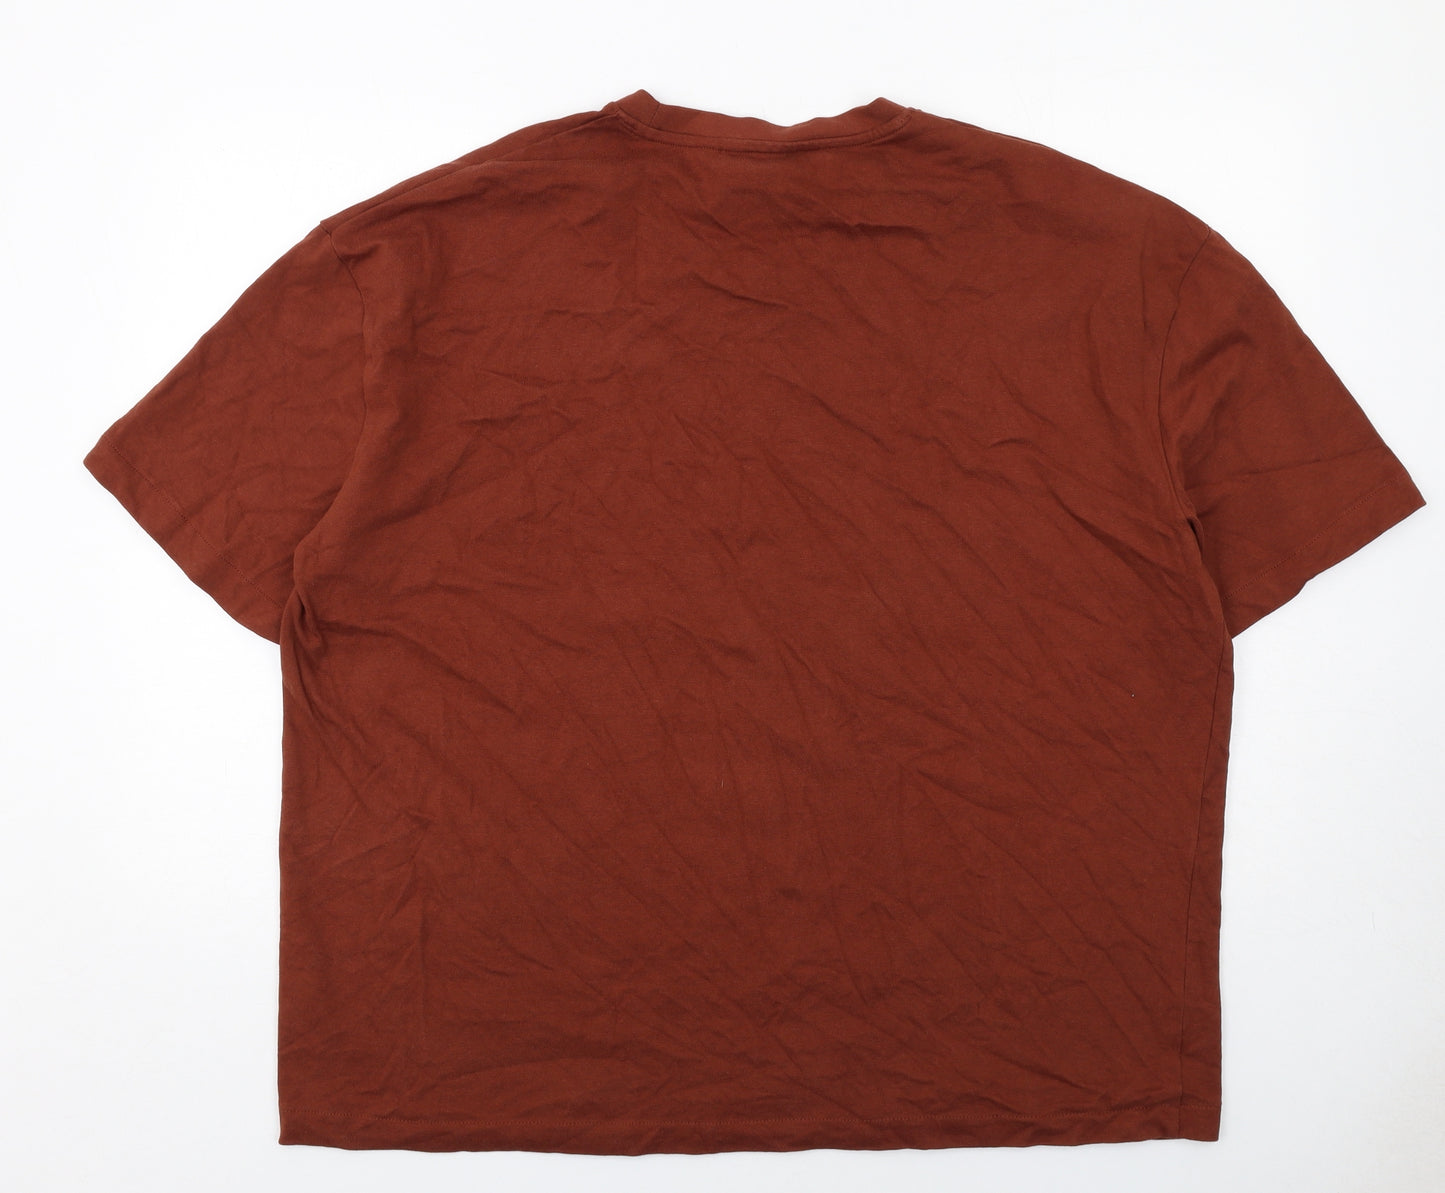 NEXT Mens Brown Cotton T-Shirt Size 2XL Round Neck